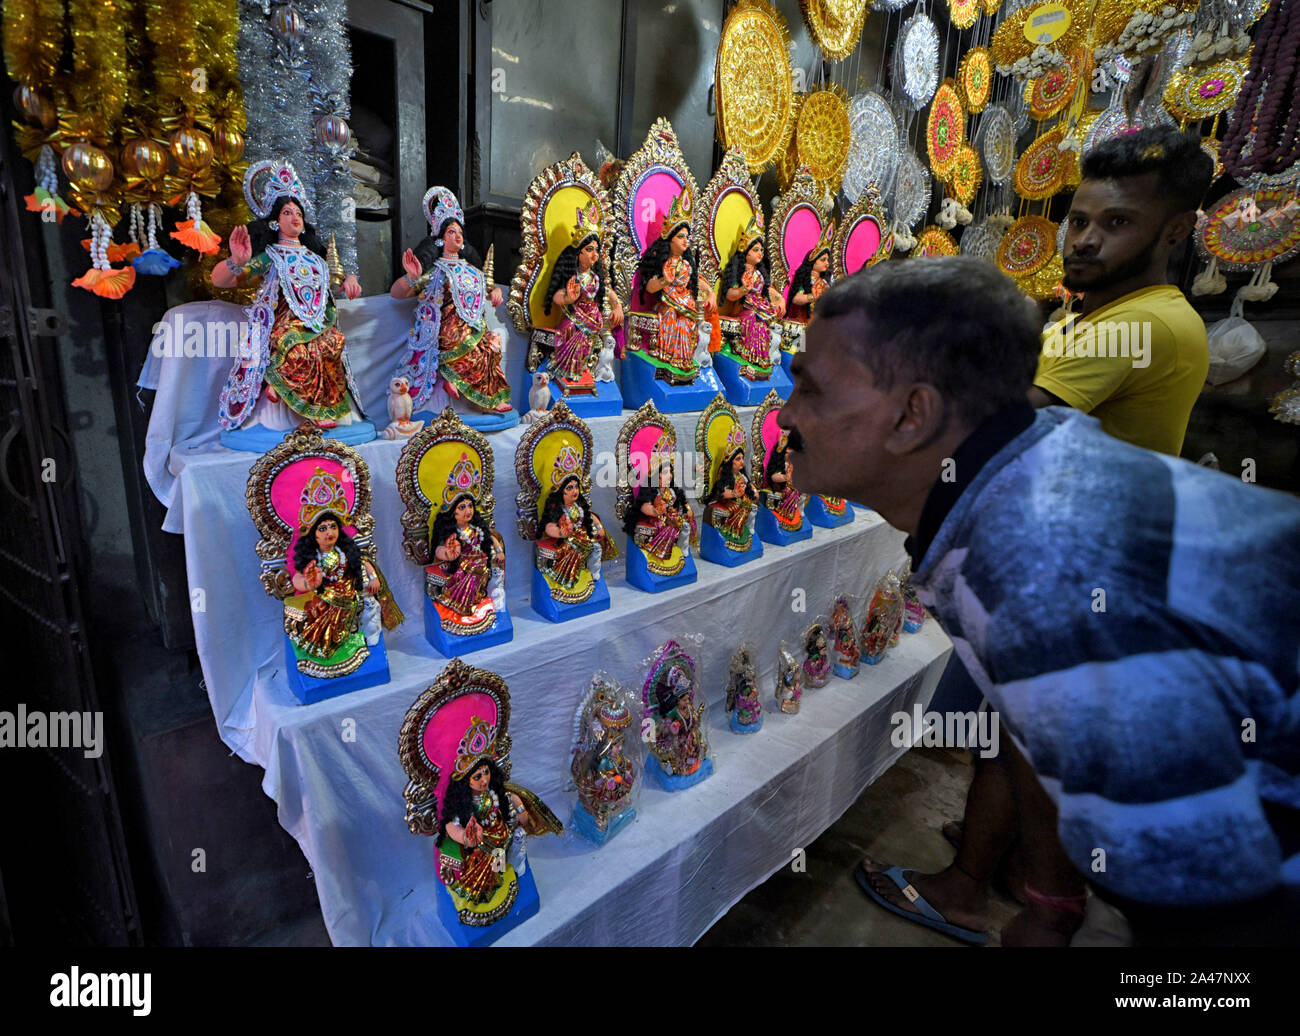 Kolkata, West Bengal, India. 24th Oct, 24. Lakshmi Idols seen on